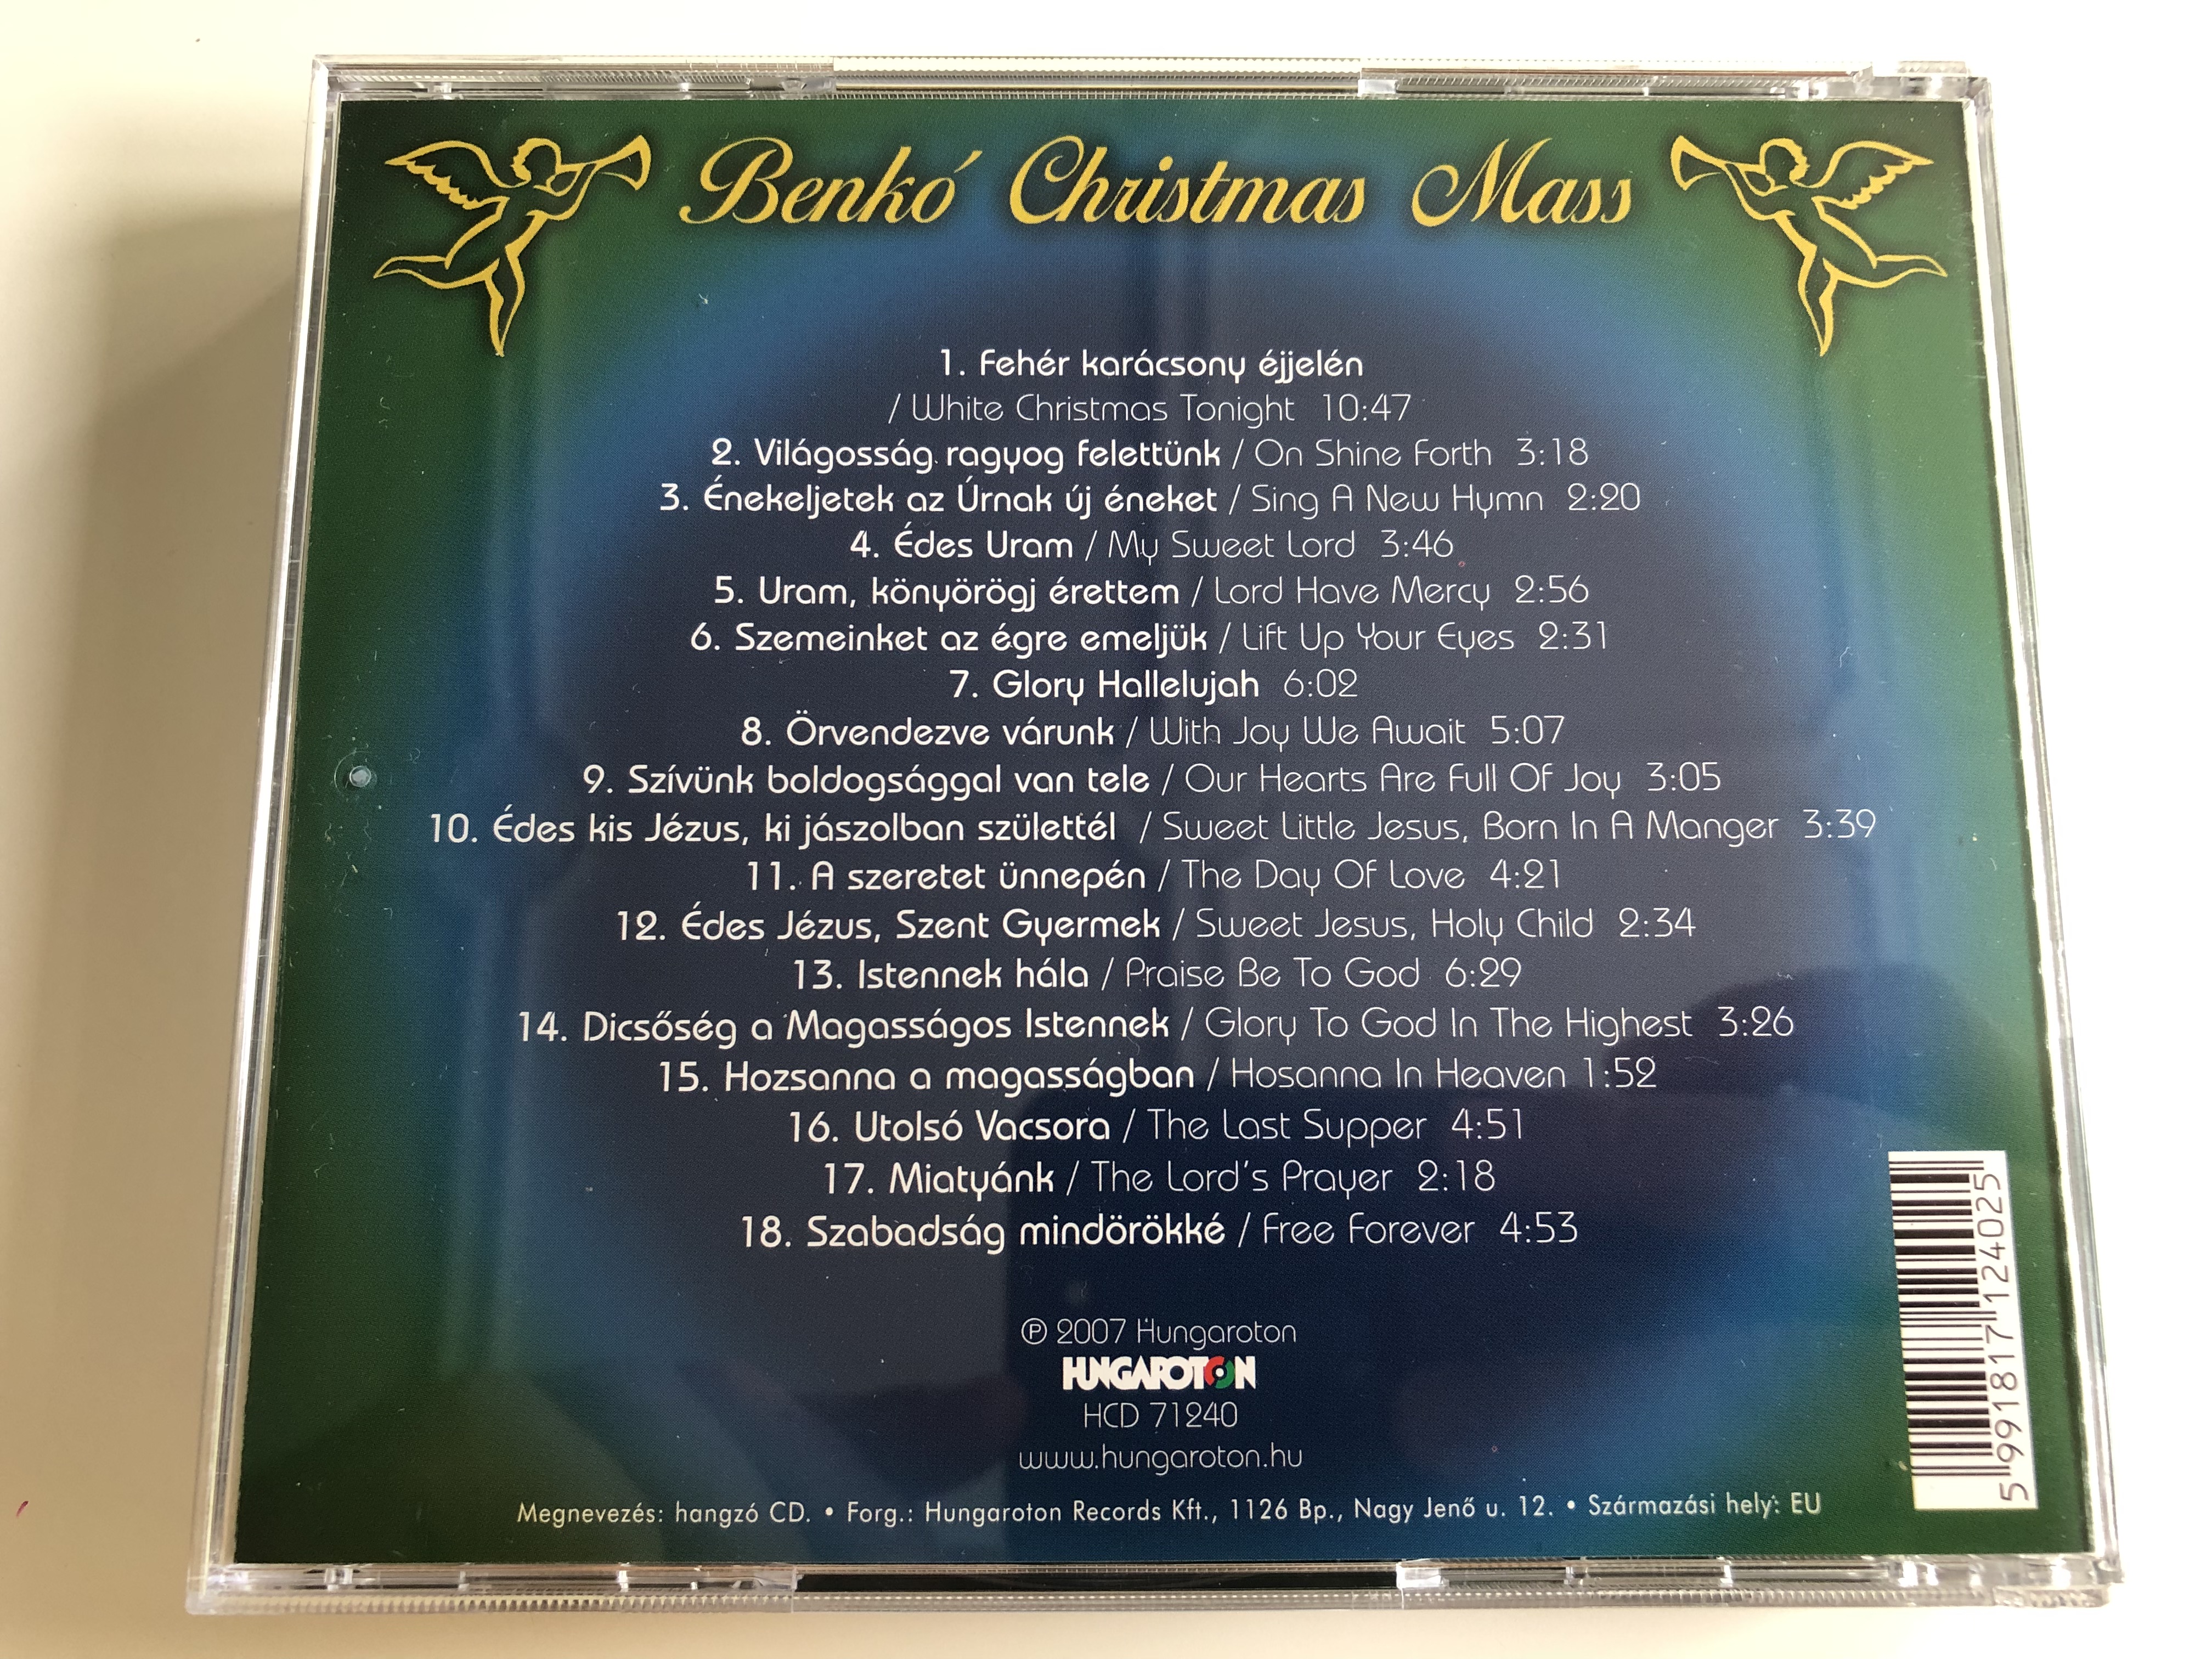 benk-dixieland-band-benk-christmas-mass-sing-a-new-hymn-my-sweet-lord-with-joy-we-await-hosanna-in-heaven-audio-cd-2007-hungaroton-hcd-71240-7-.jpg